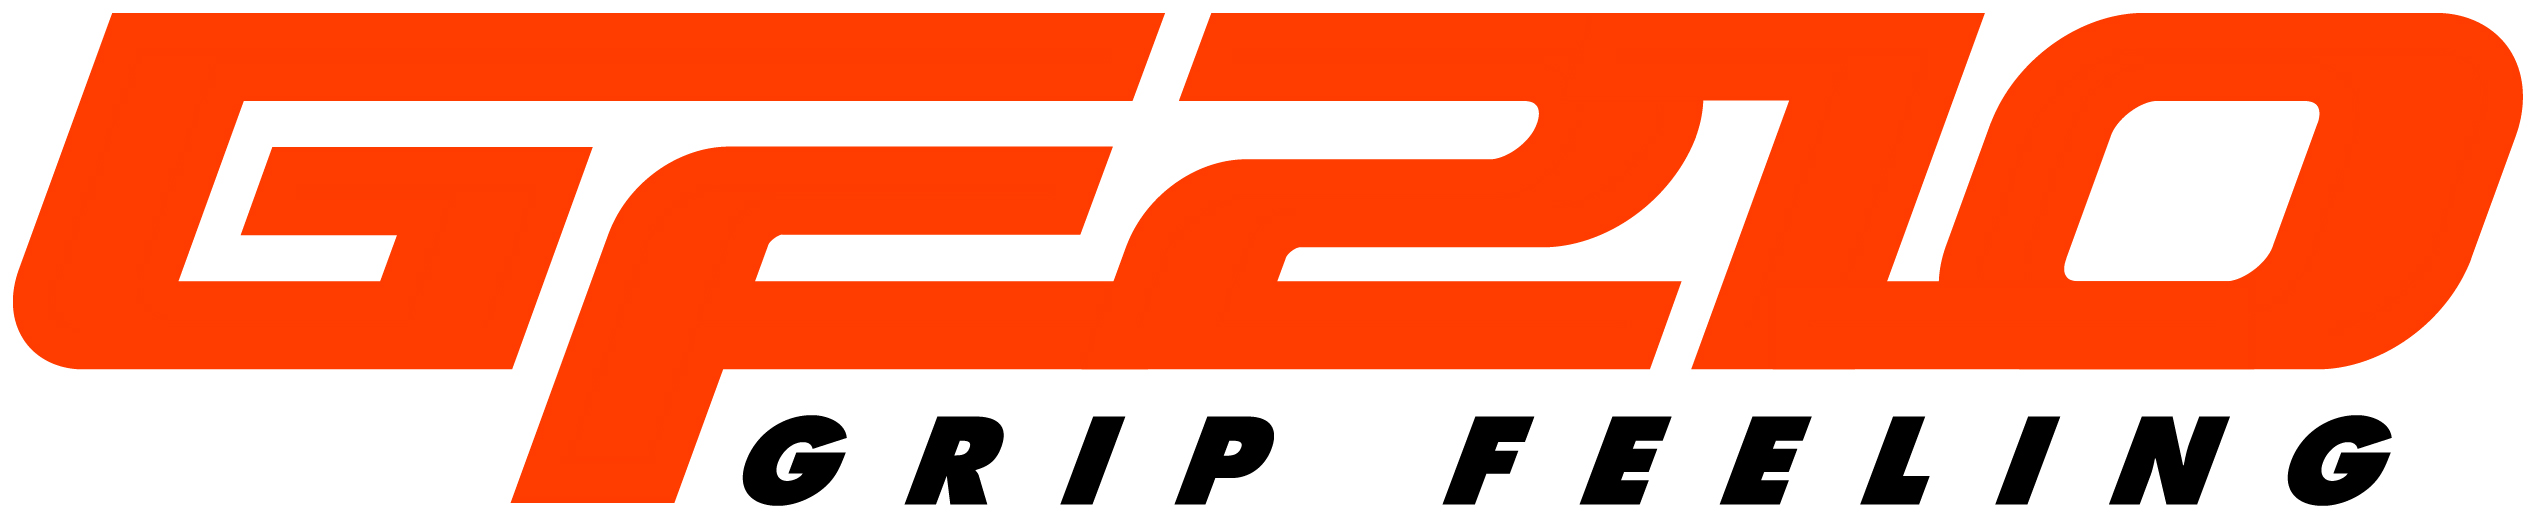 gf210_logo